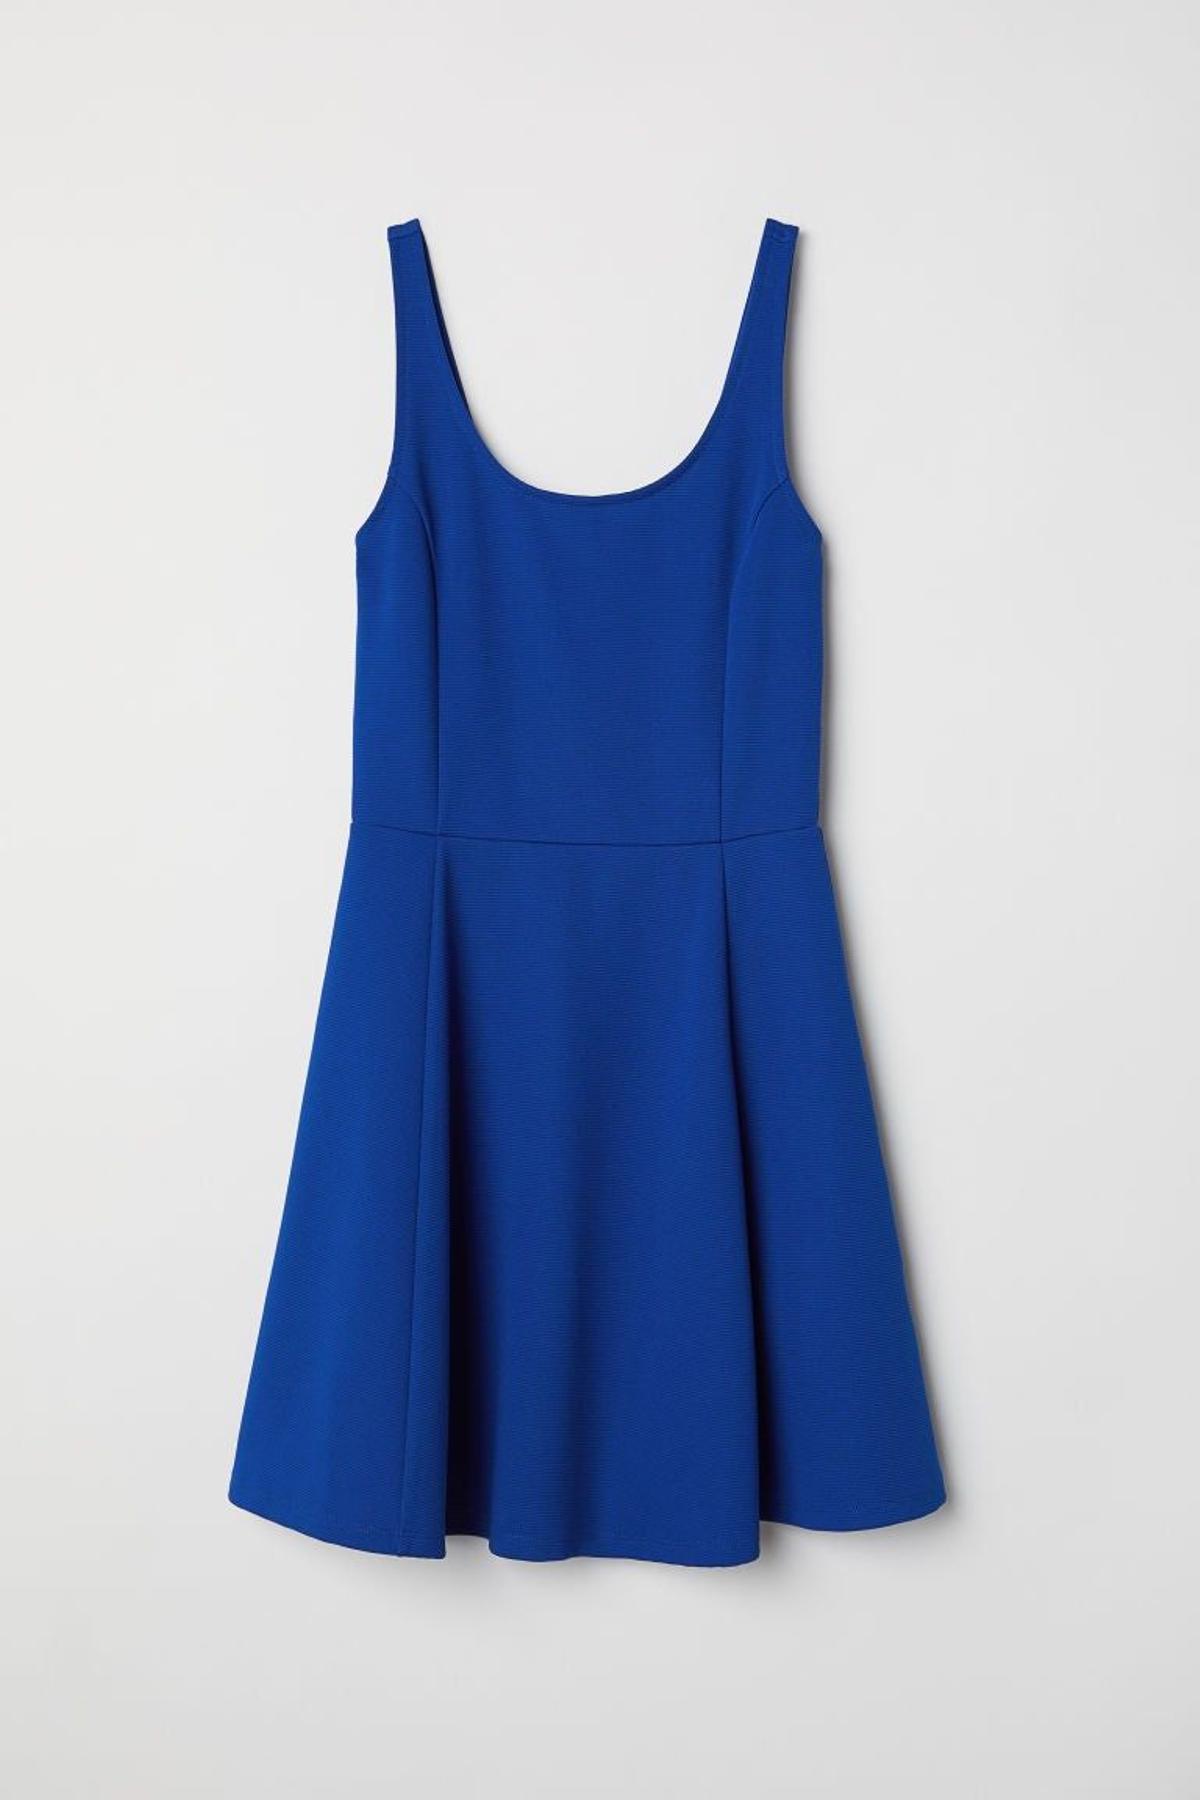 Vestido de tirantes azul de H&amp;M. (Precio: 6,99 euros)